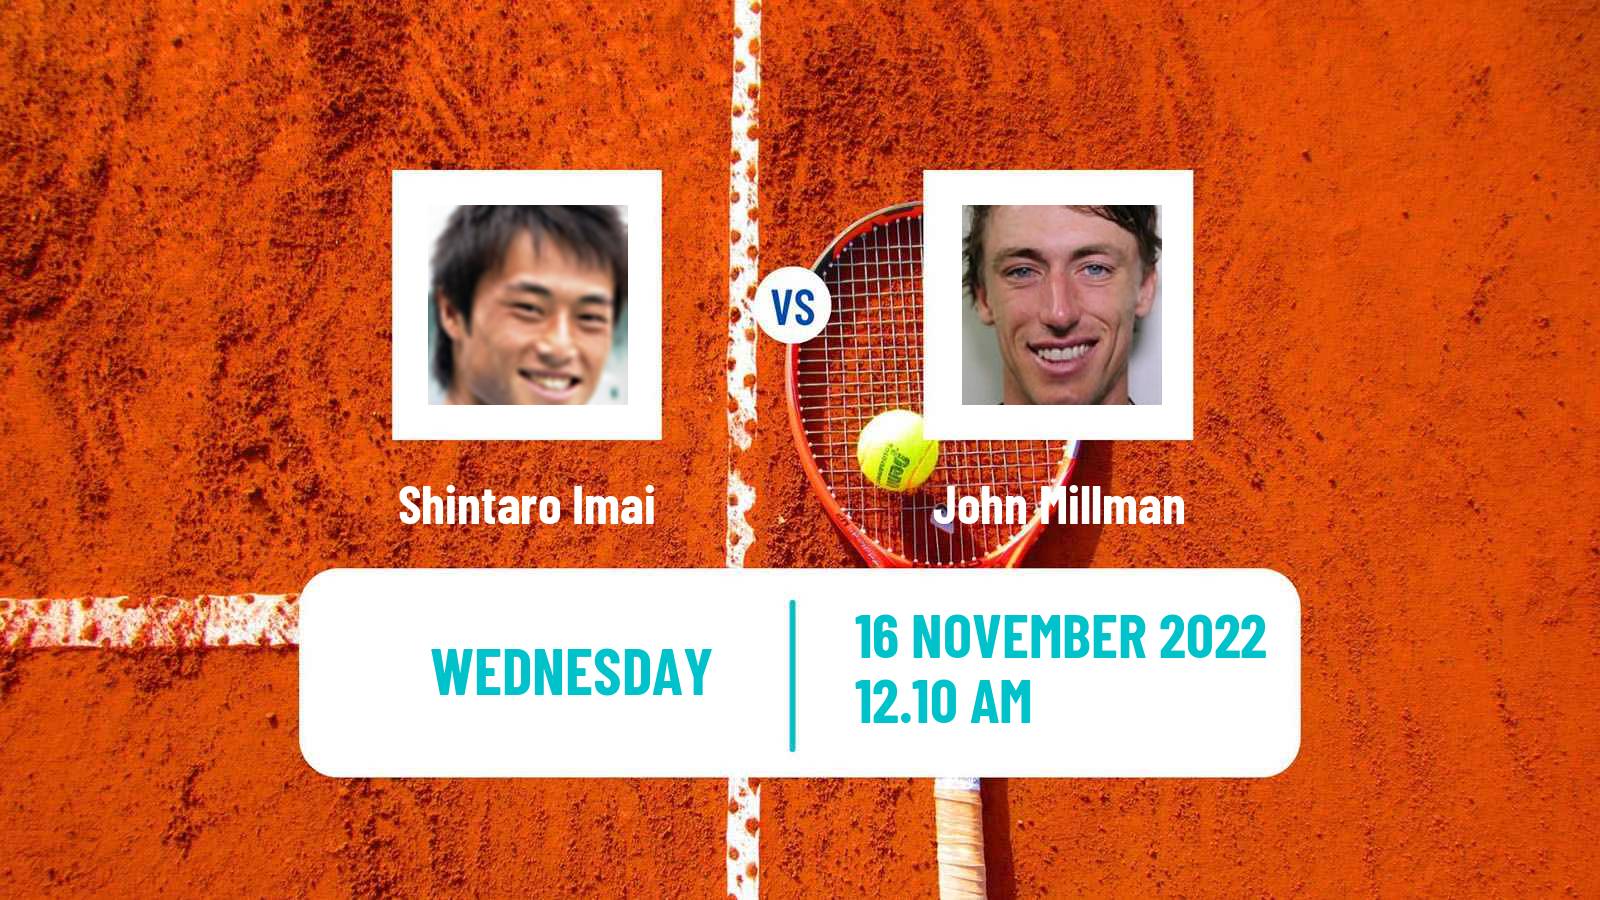 Tennis ATP Challenger Shintaro Imai - John Millman